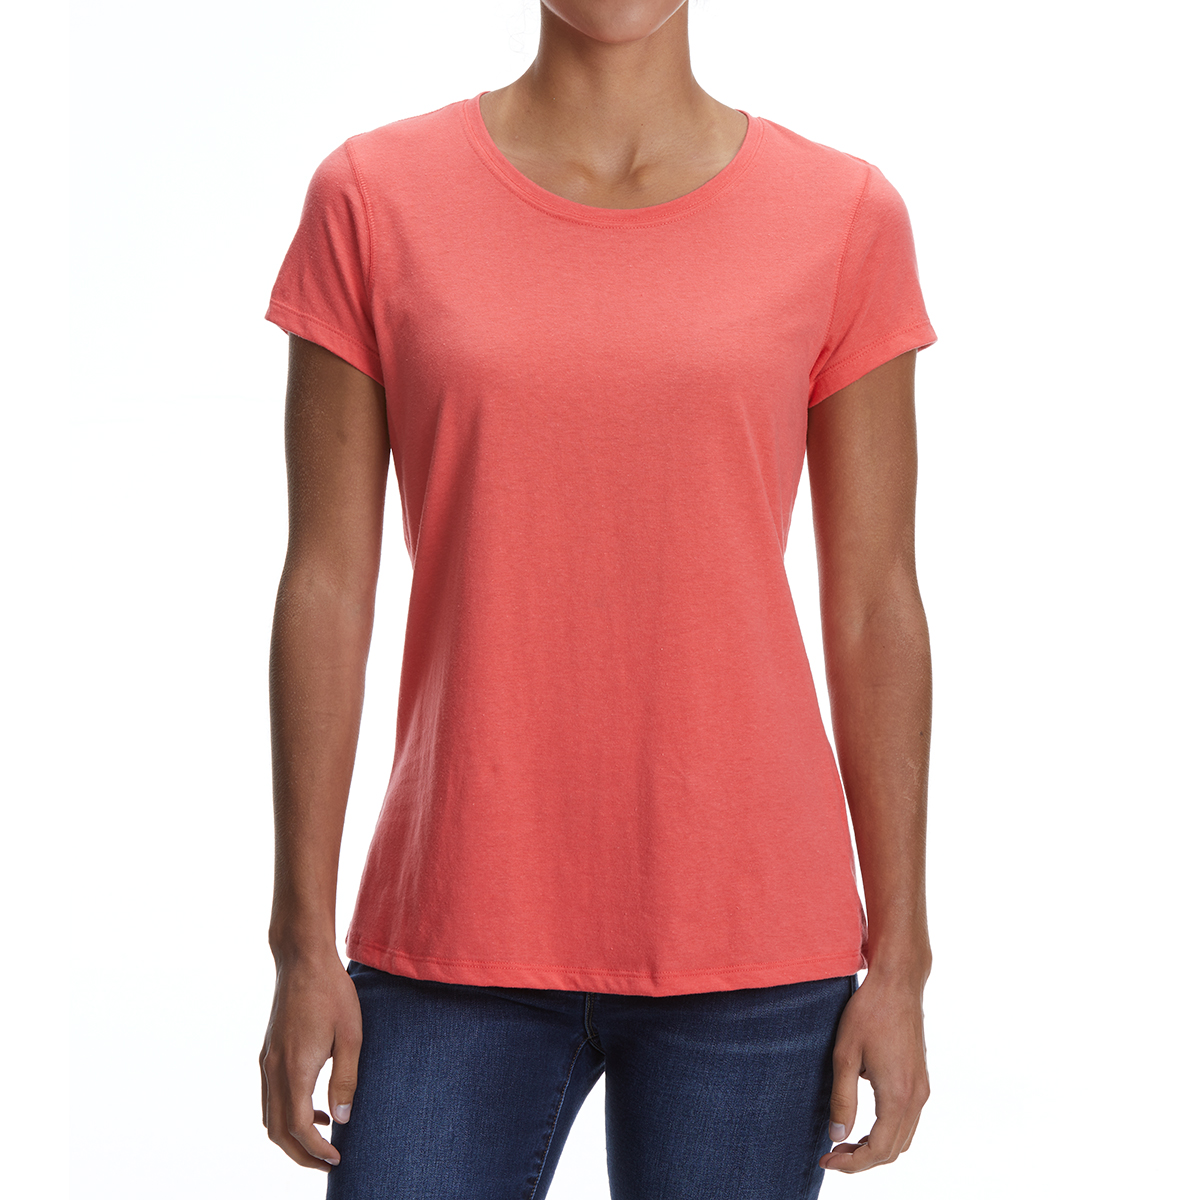 Columbia Women's Solar Shield Short-Sleeve Shirt - Red, S